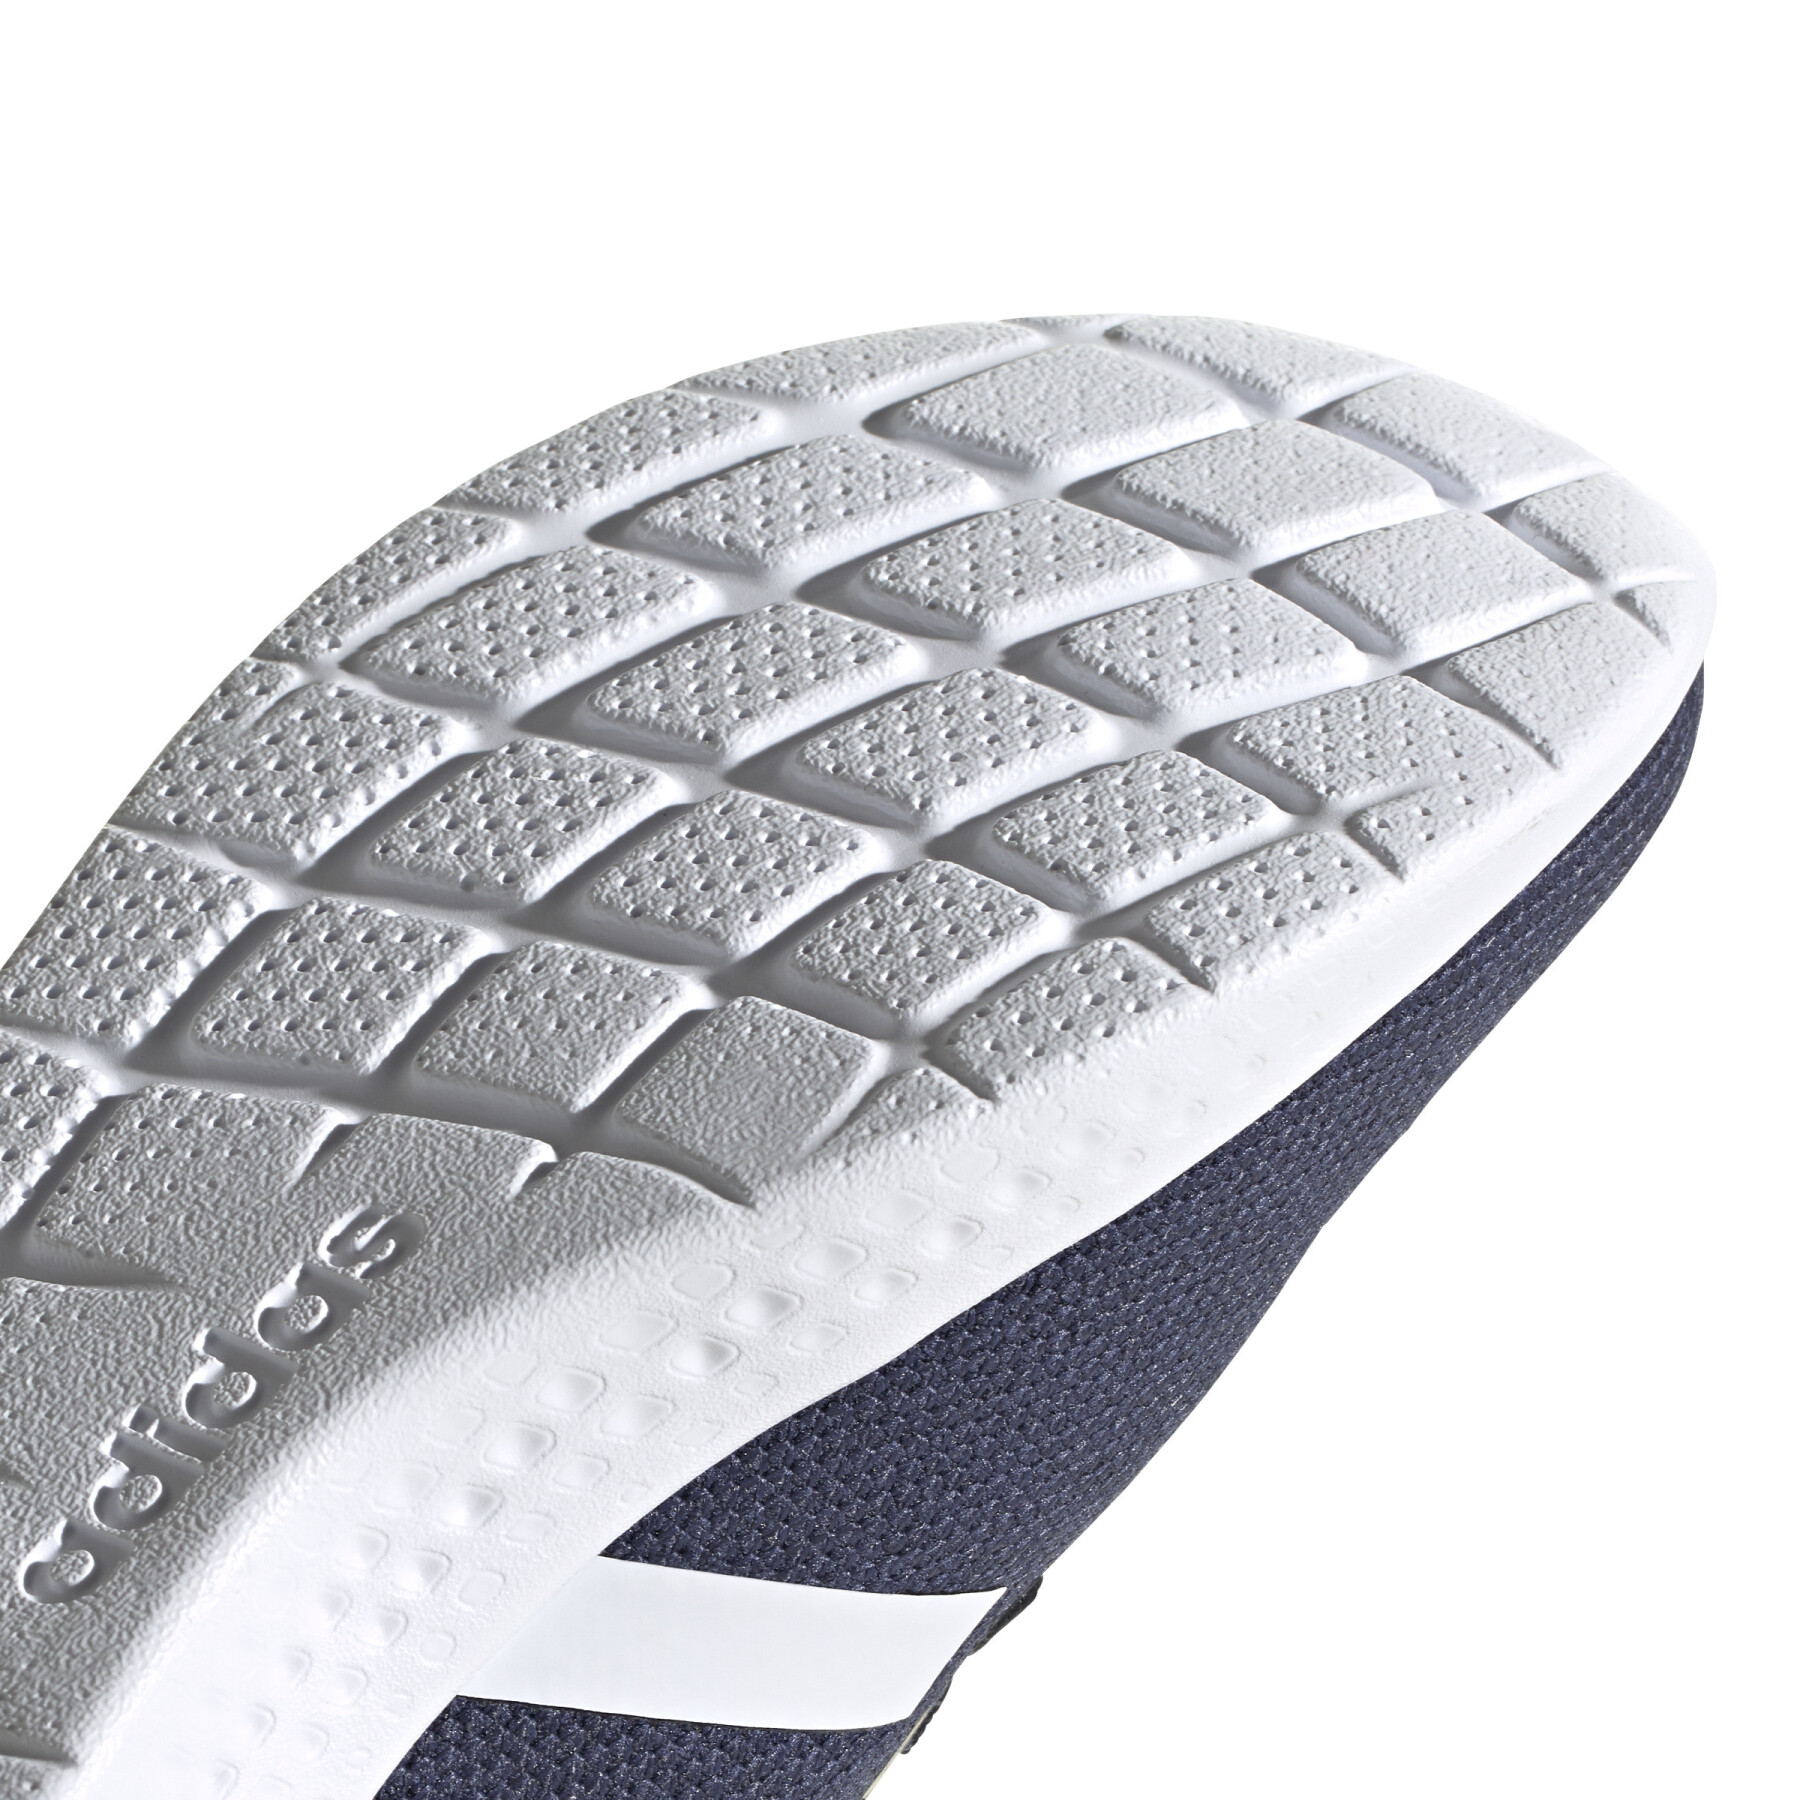 Chaussures de running adidas Puremotion